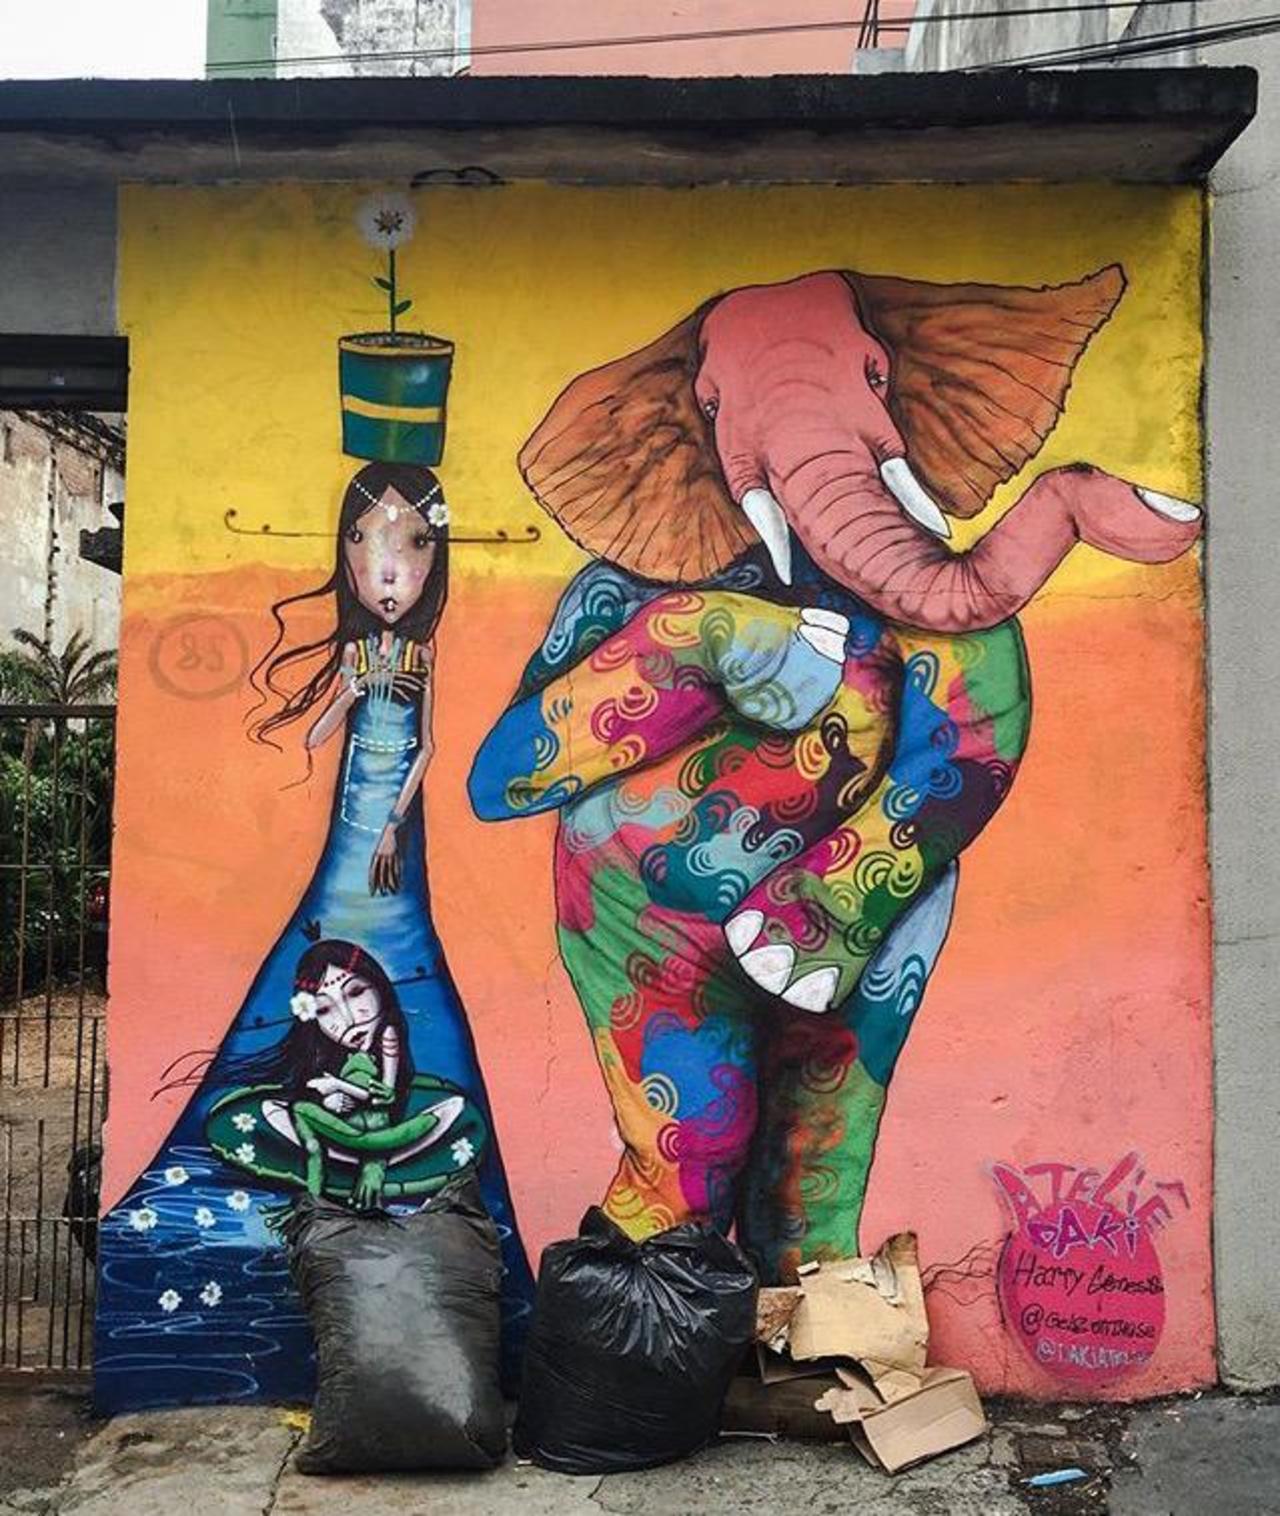 Street Art by Harry Geneis & Gelson in São Paulo #art #mural #graffiti #streetart http://t.co/SlLbhuMZfD … … …… … http://twitter.com/GoogleStreetArt/status/648016473831645184/photo/1/large?utm_source=fb&utm_medium=fb&utm_campaign=charlesjackso14&utm_content=648021540781588480